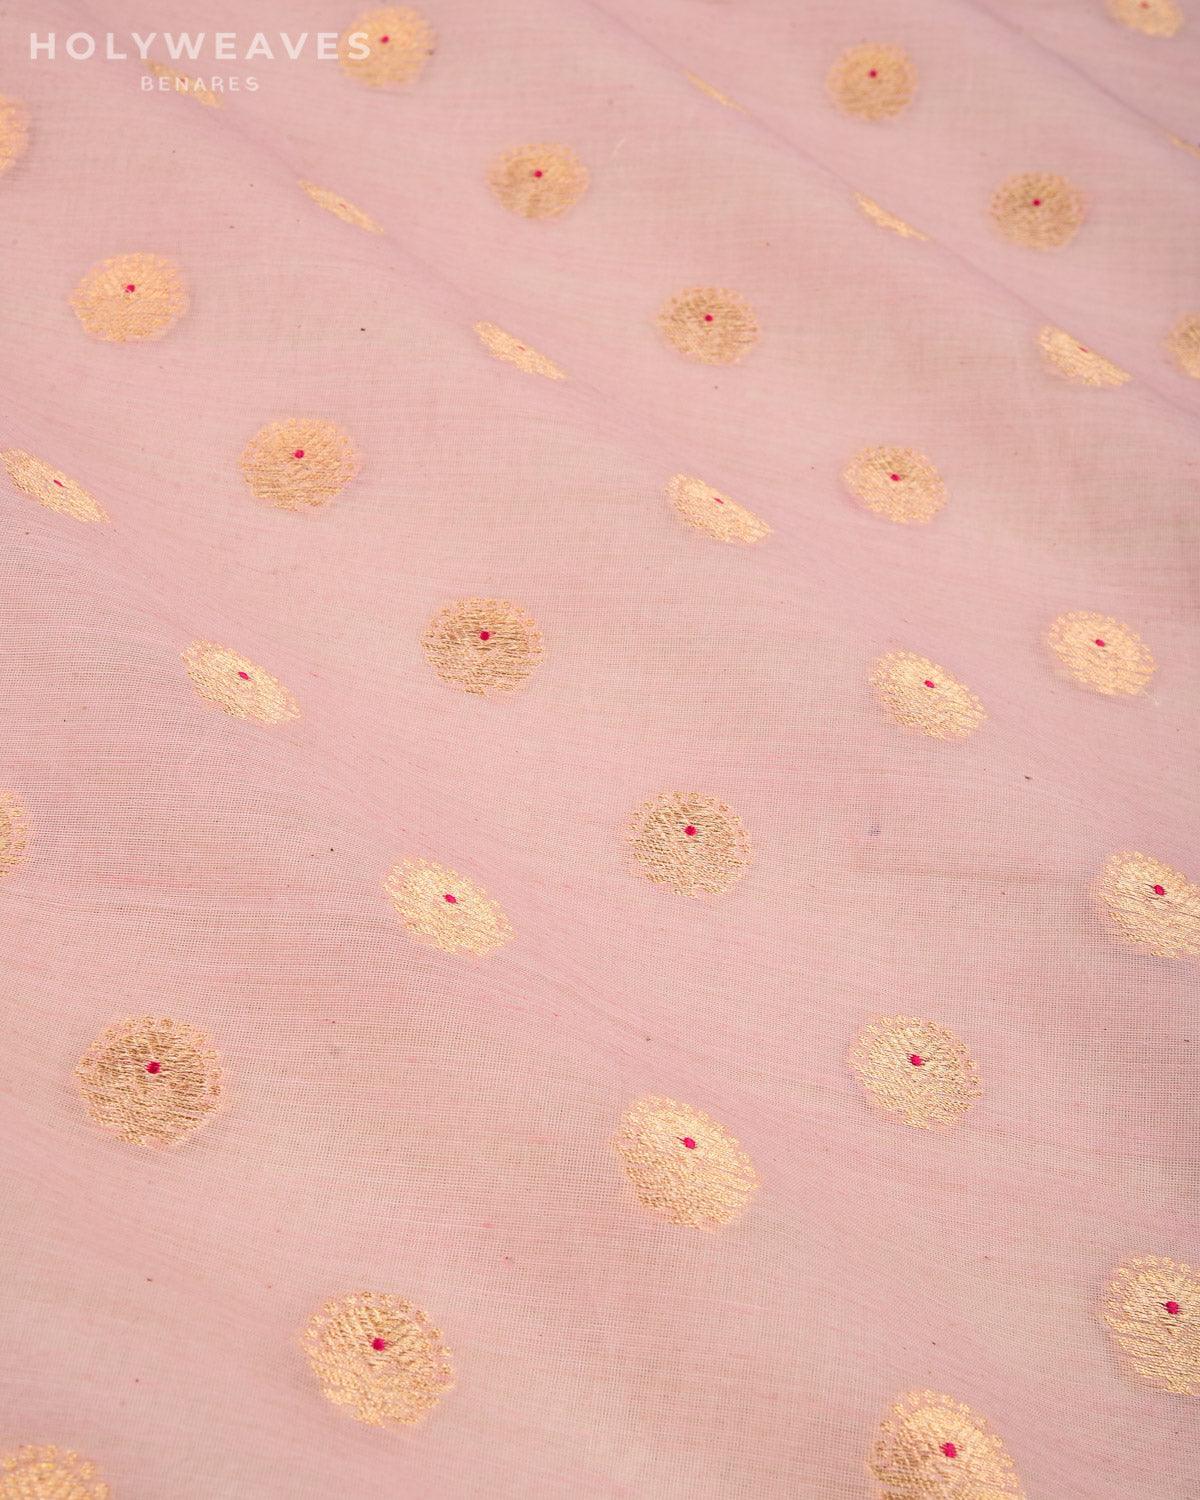 English Lavender Banarasi Silver Zari & Red Resham Alfi Buti Cutwork Brocade Handwoven Cotton Silk Fabric - By HolyWeaves, Benares